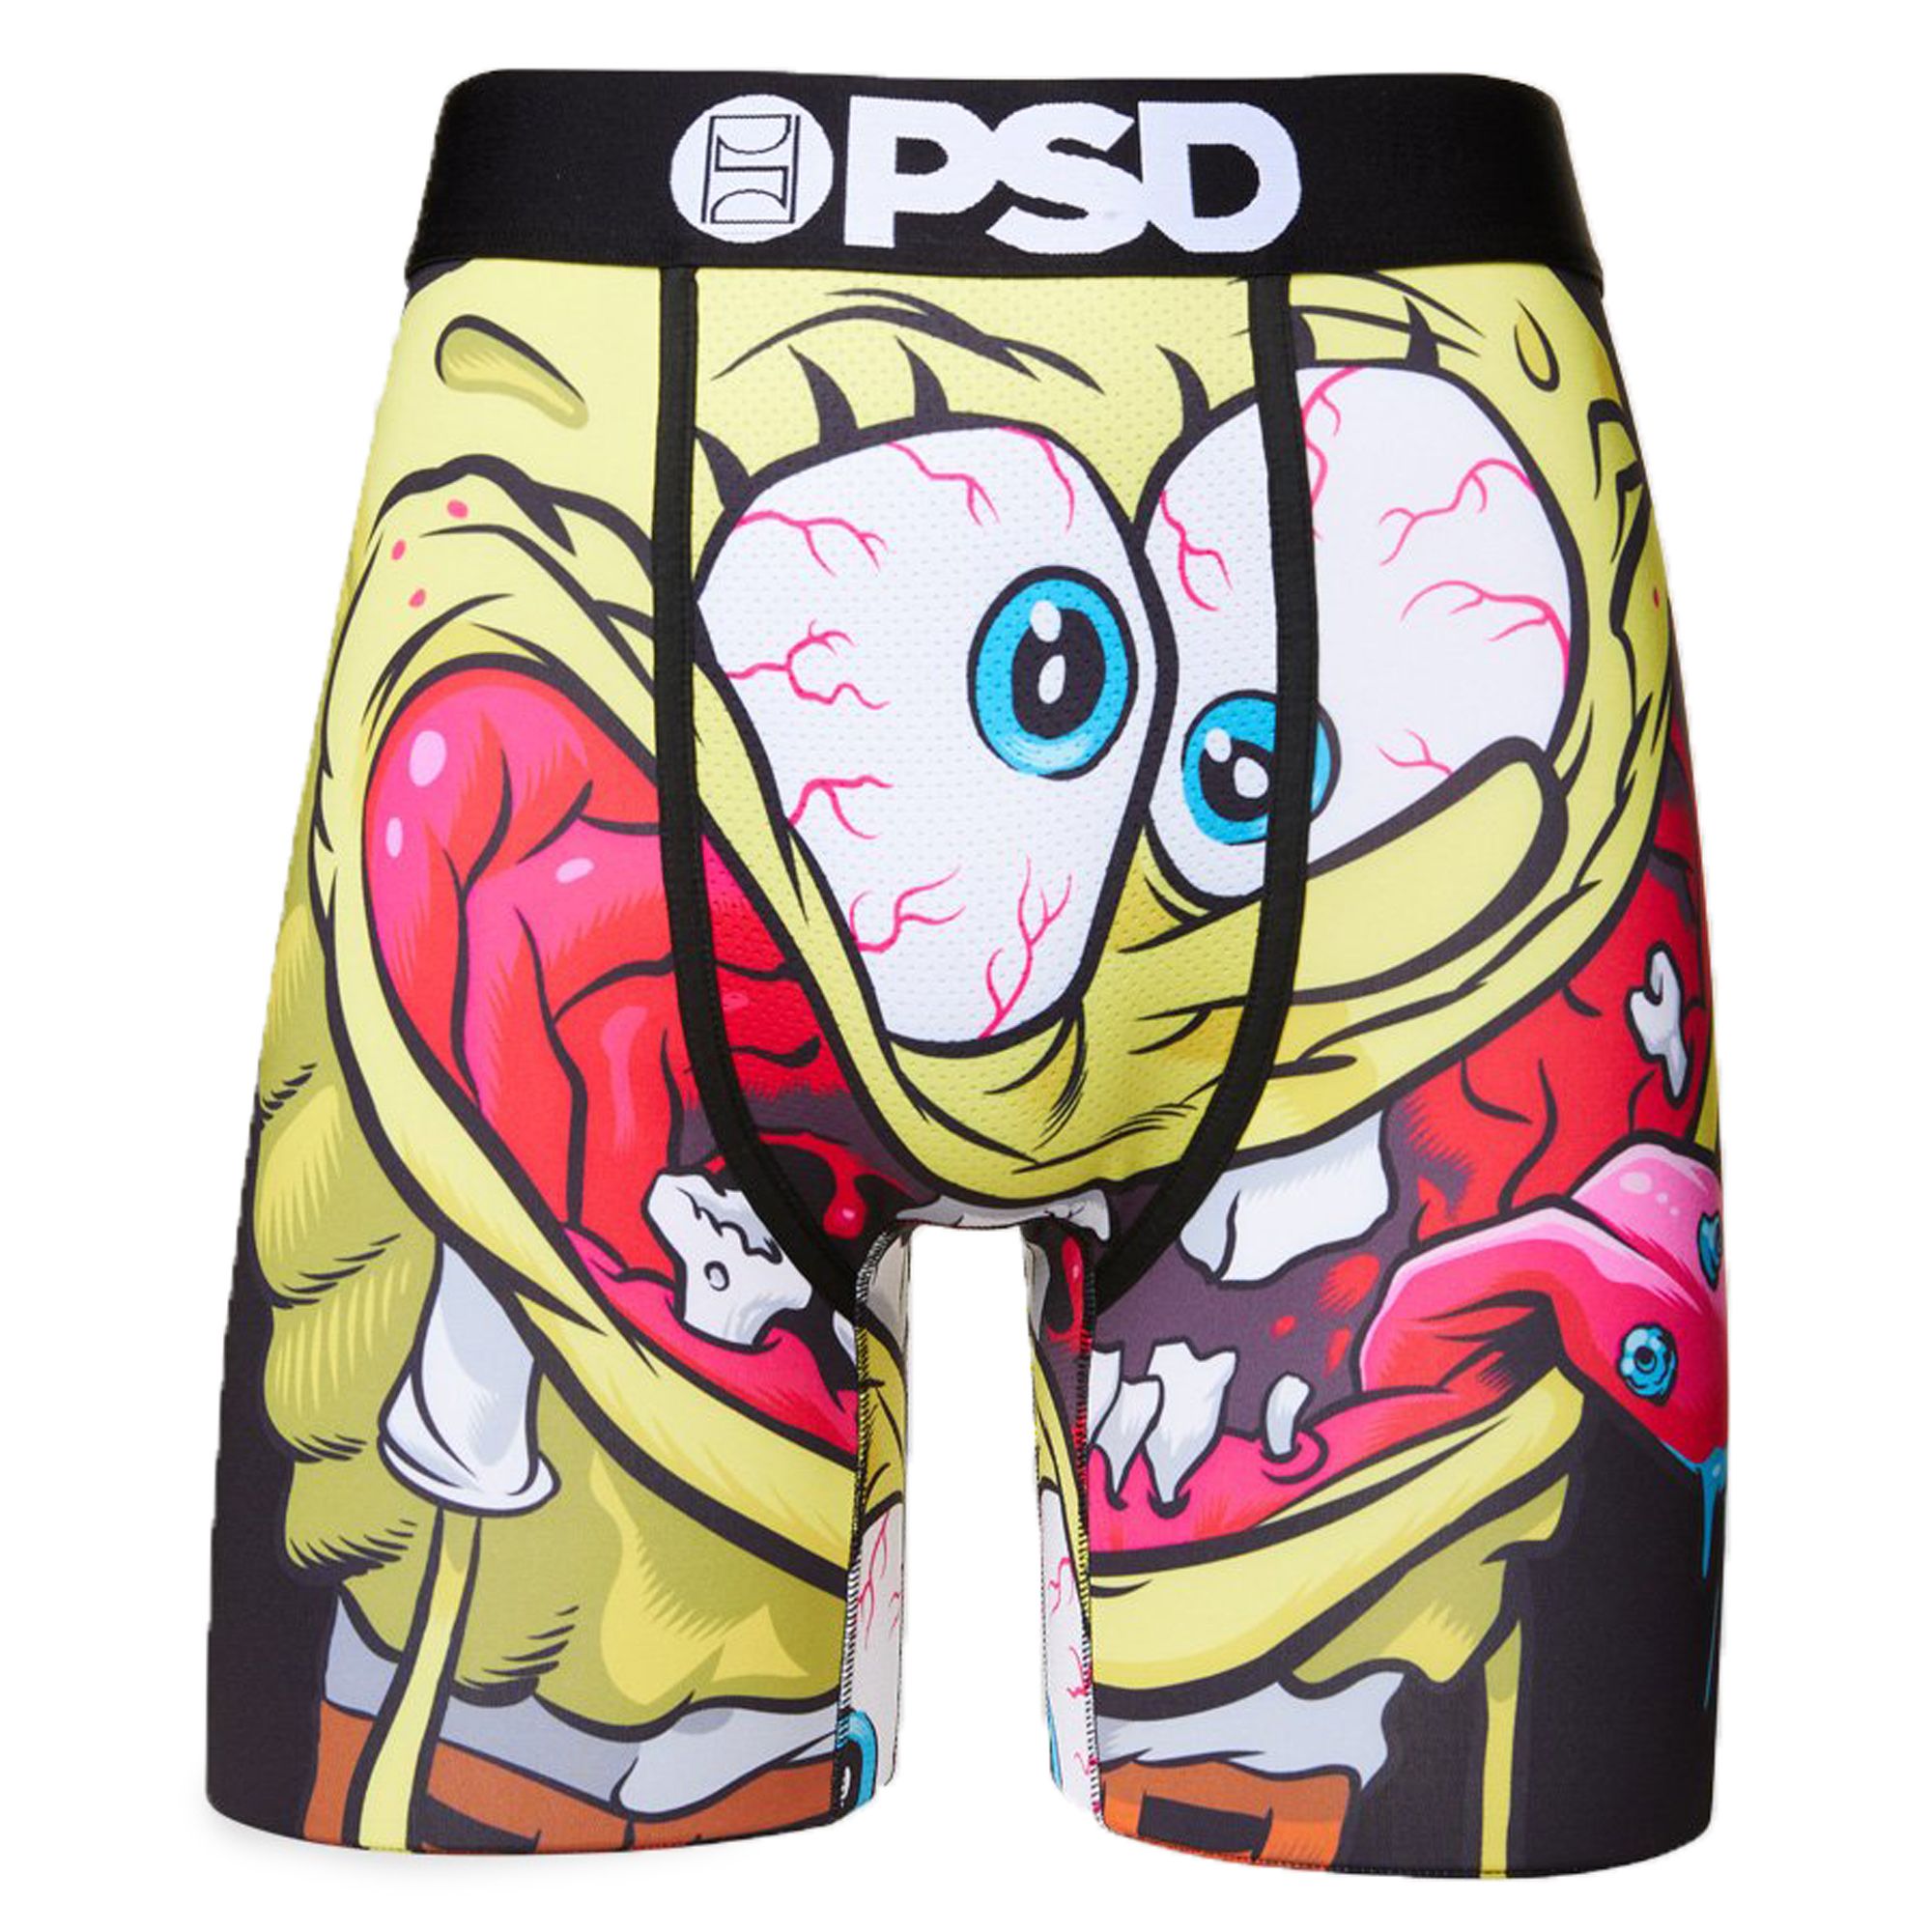 PSD Spongebob Krusty Pants 321180023 - Shiekh